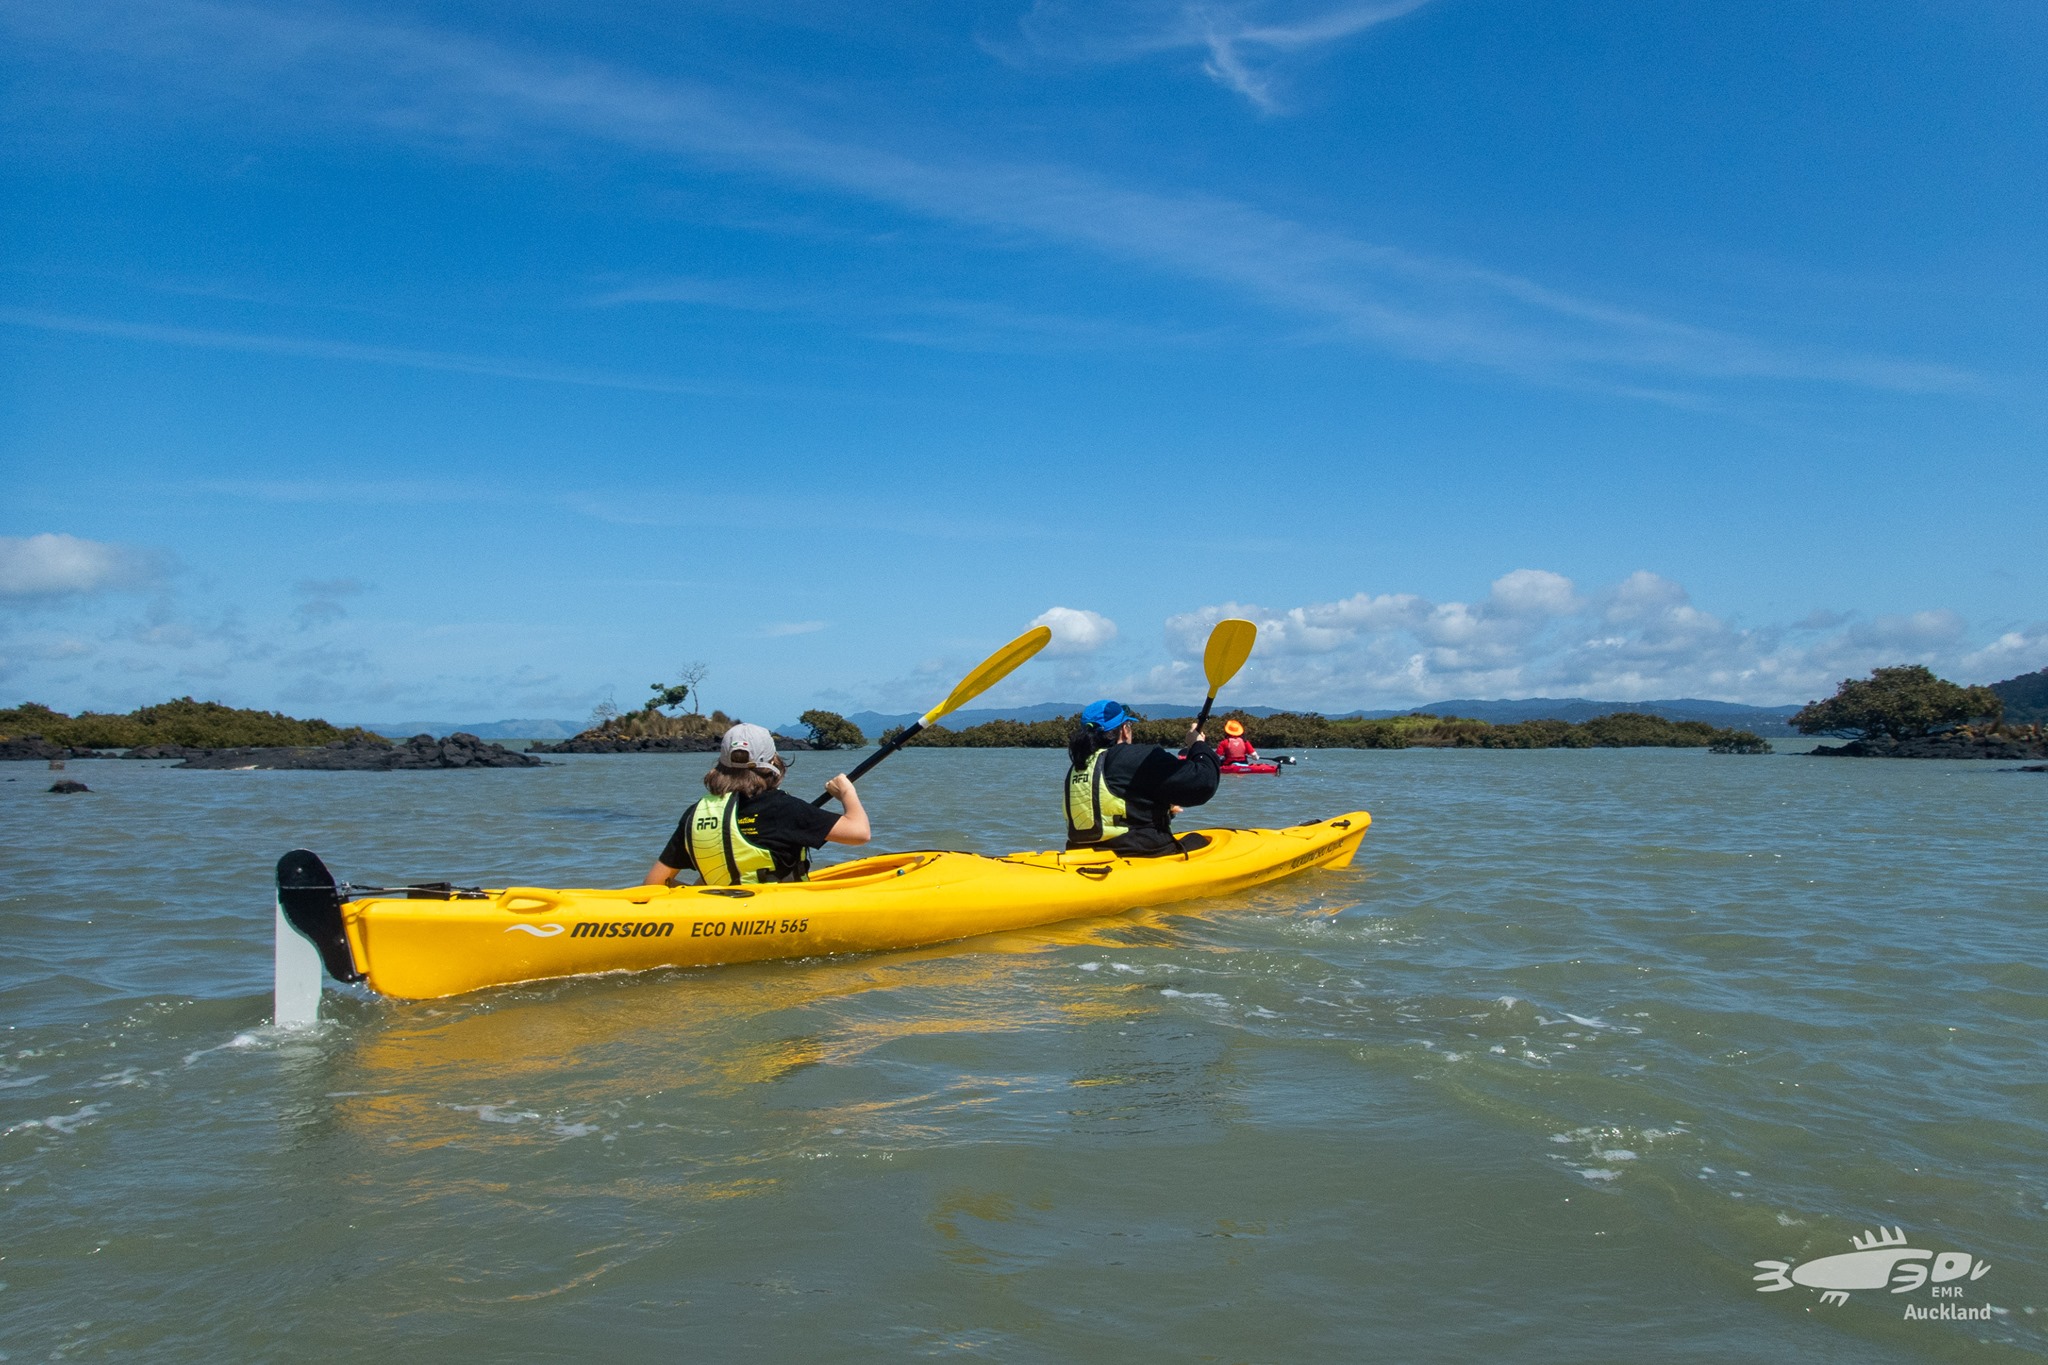 Locals enjoy Manukau Harbour in kayaks